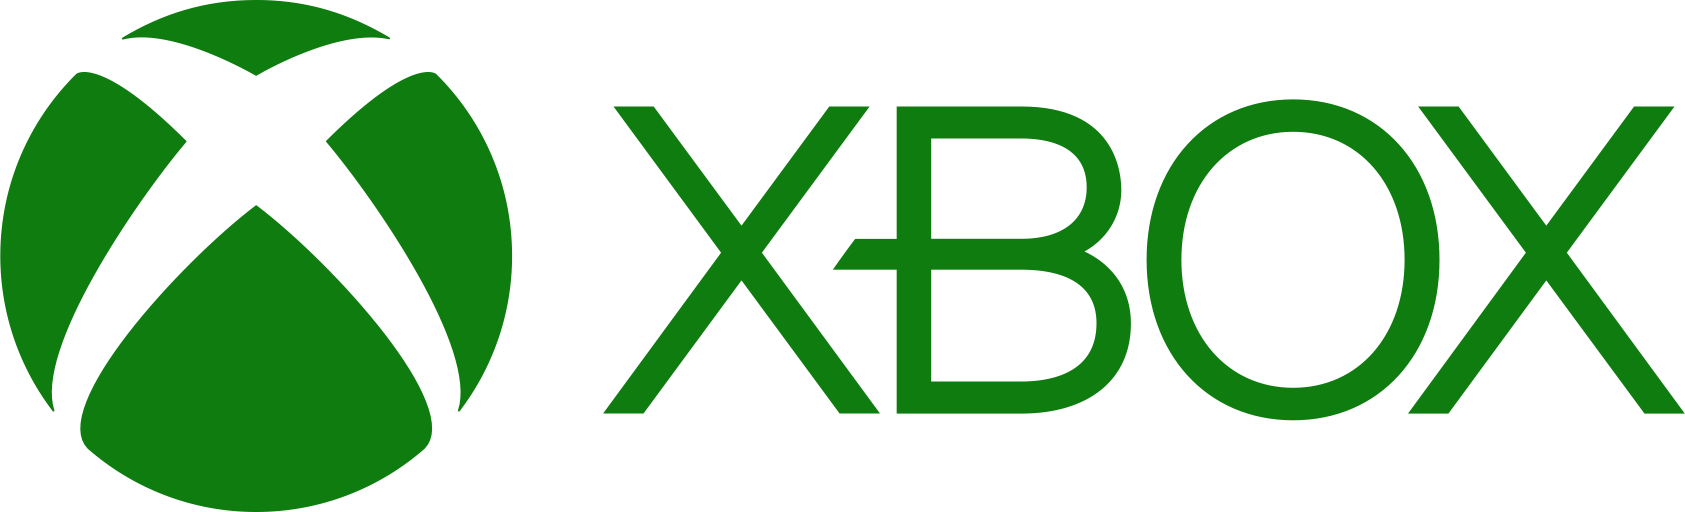 Xbox Logo PNG - 179193